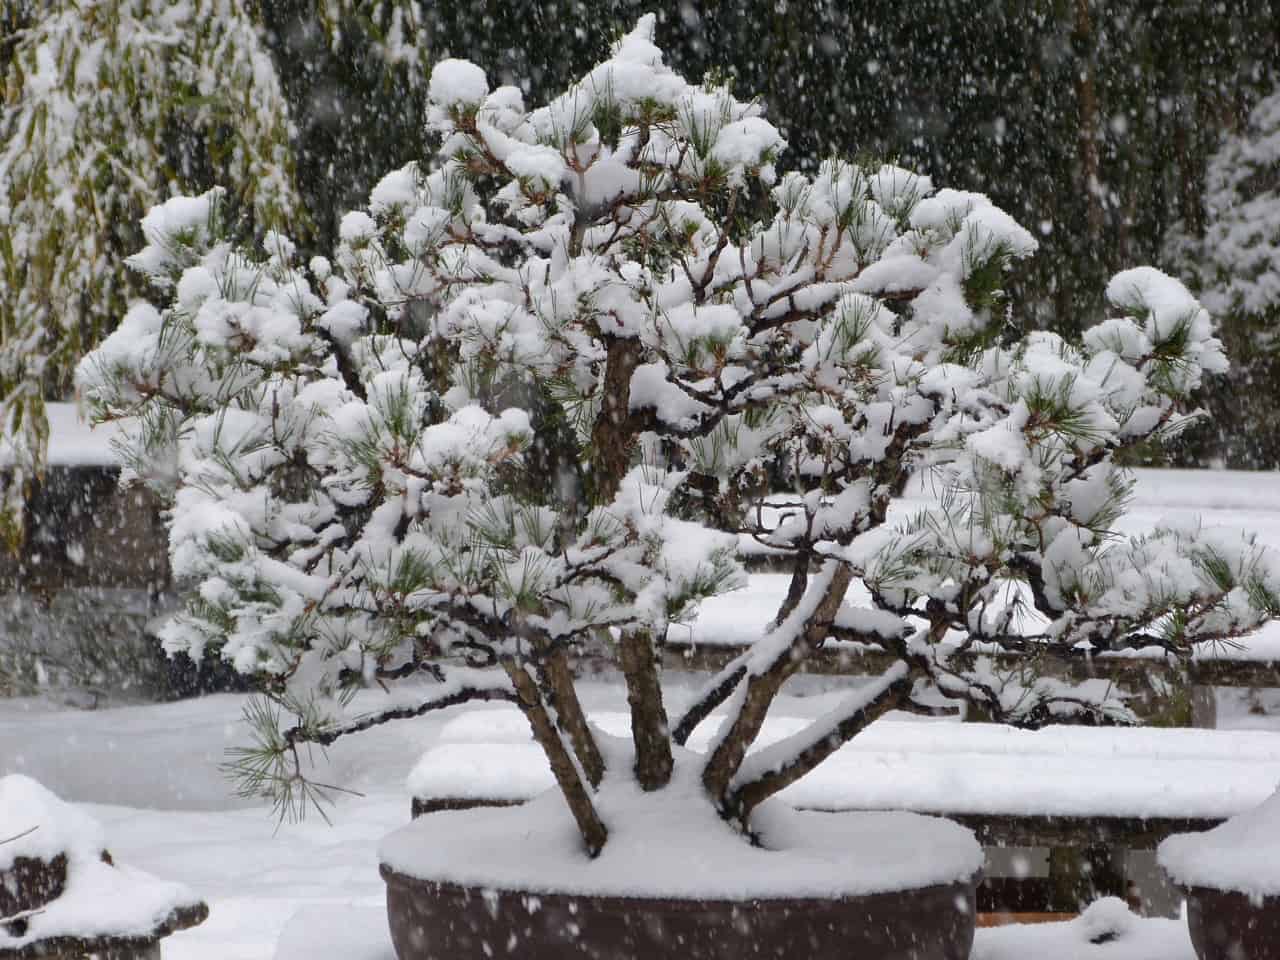 Bonsai in the snow